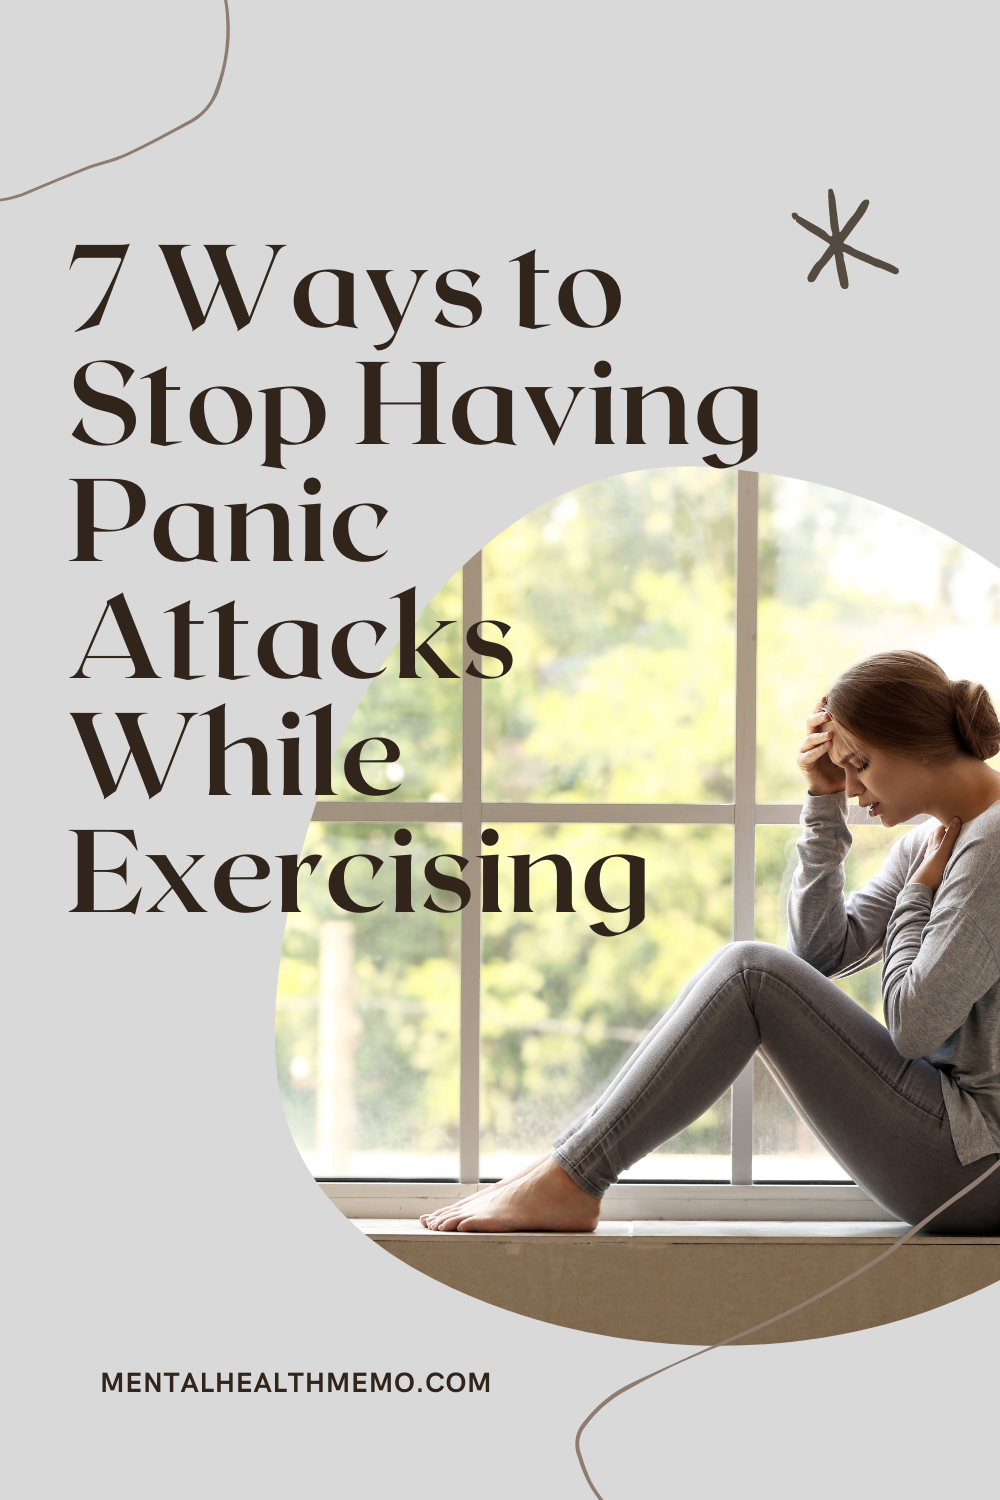 7 ways to stop having panic attacks while exercising